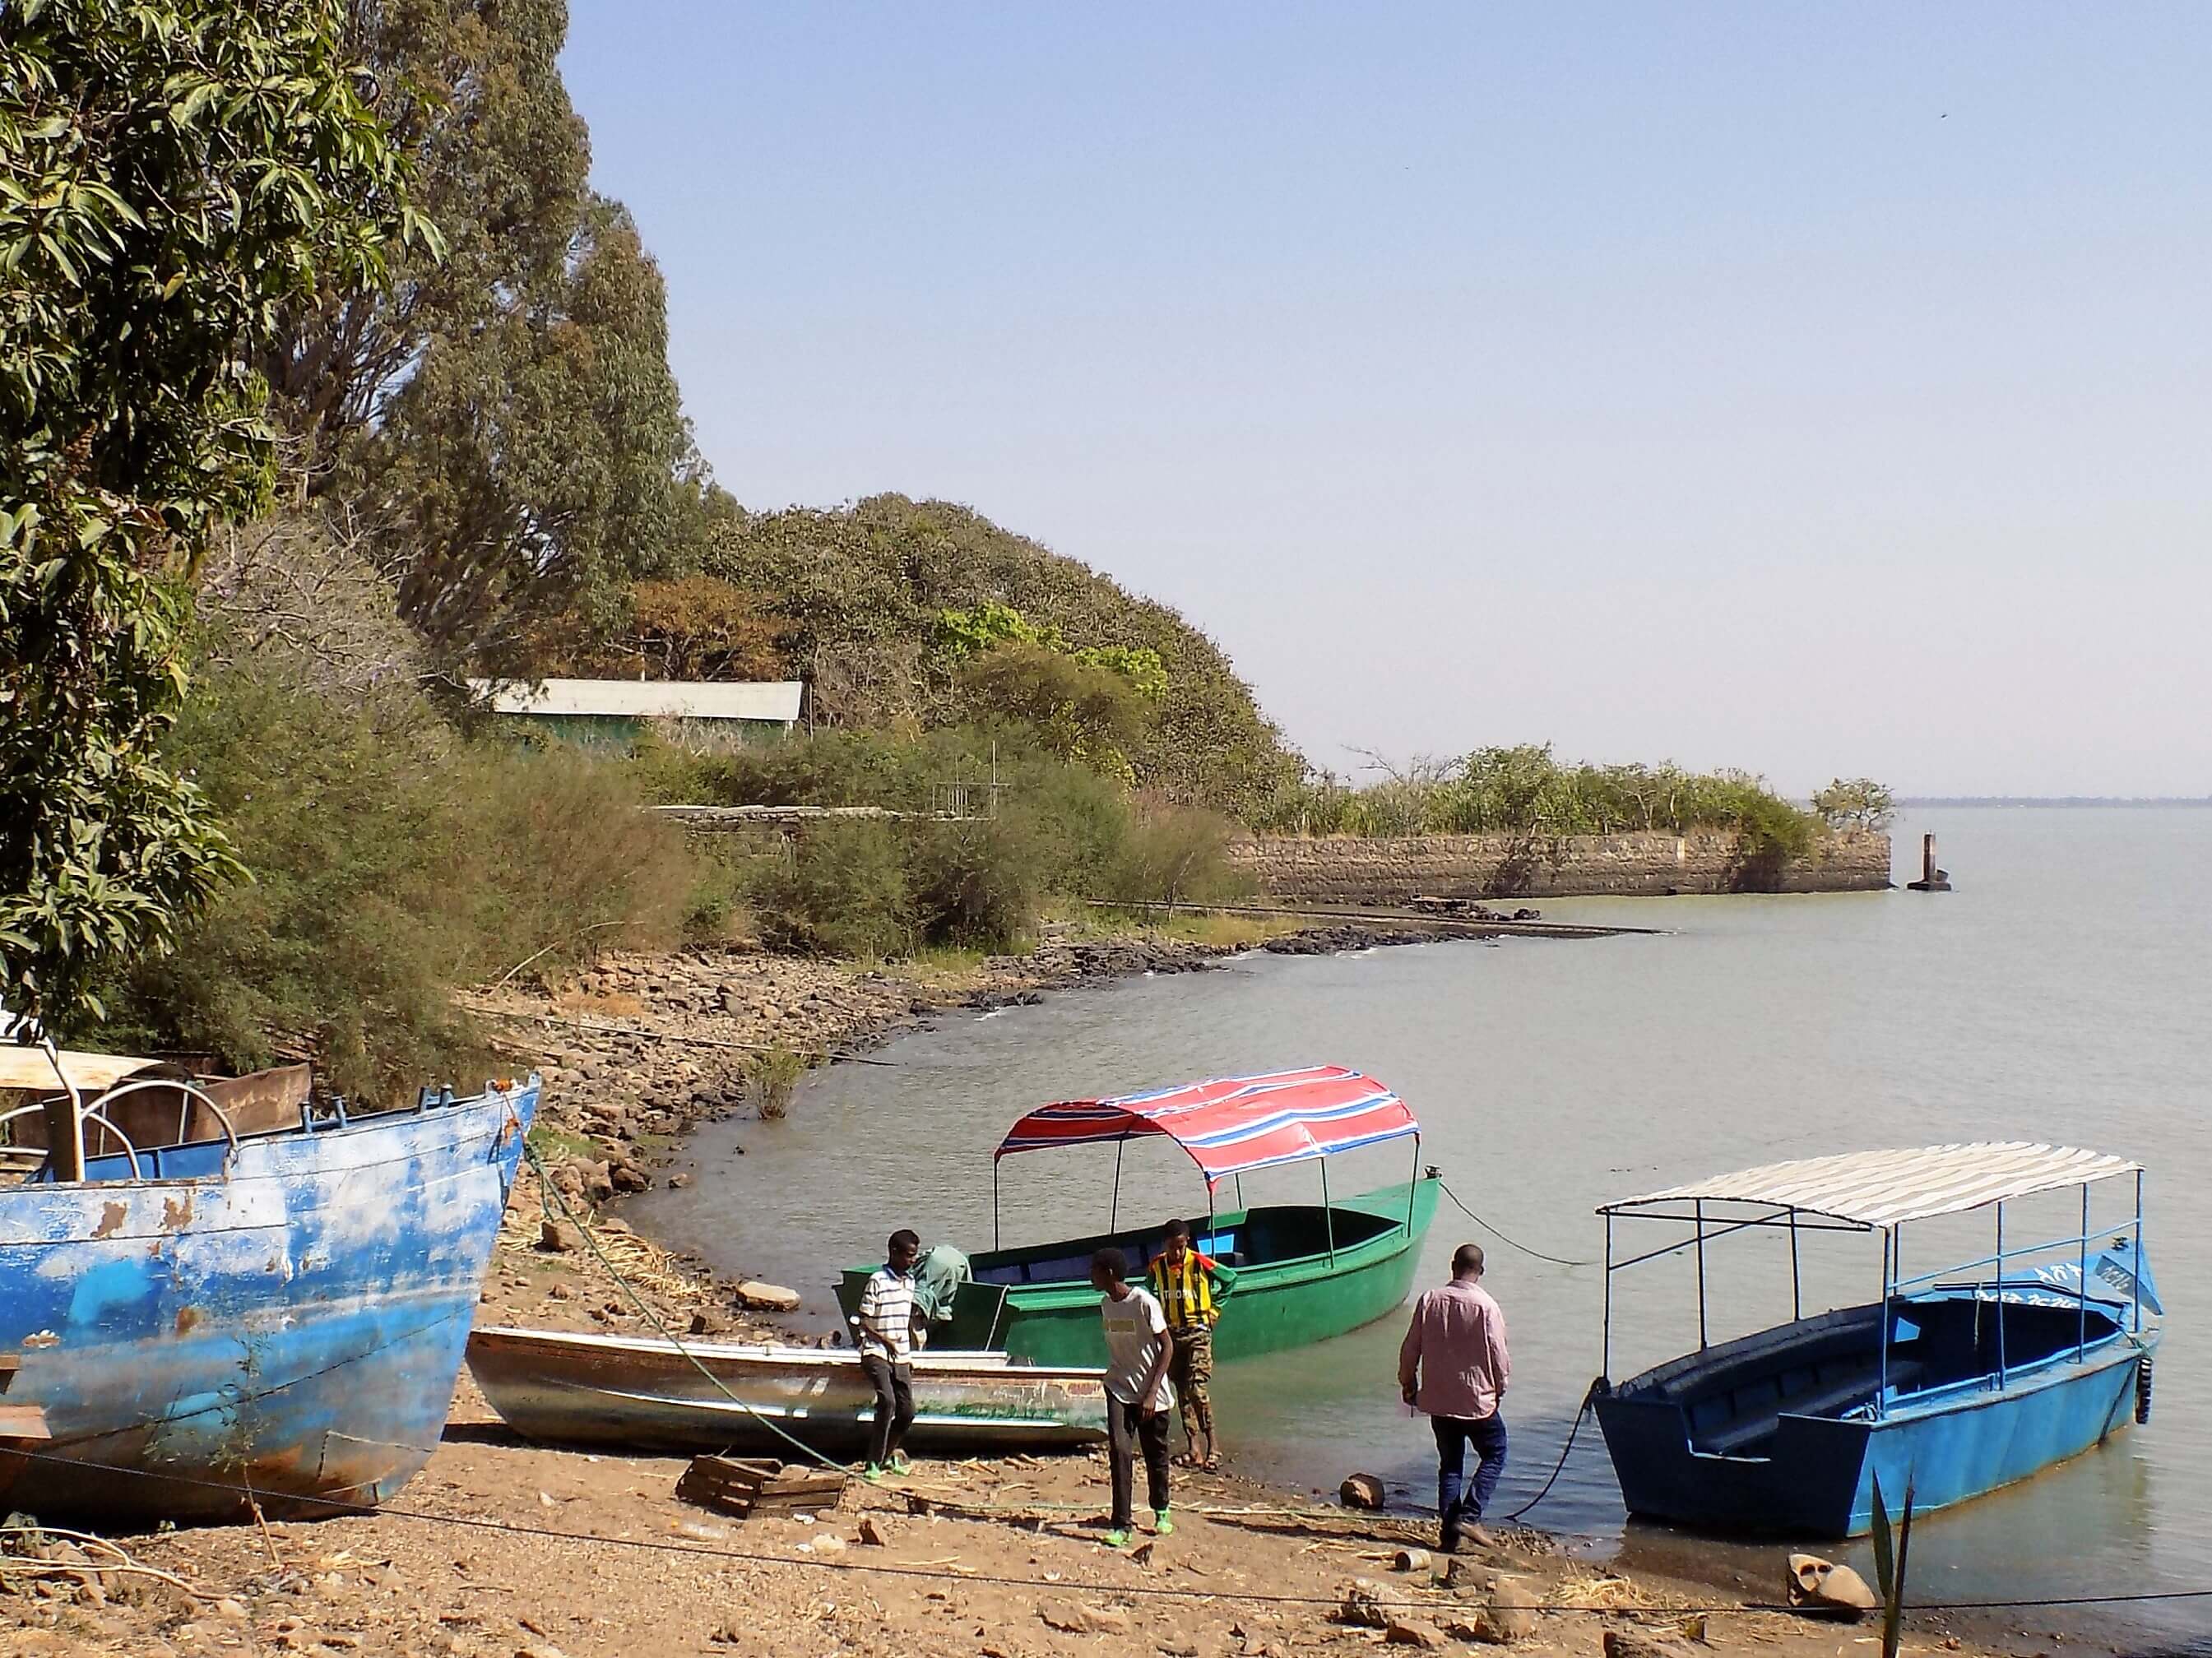 This photo shows a few small boats on the shores of Lake Tana at Gorgora.